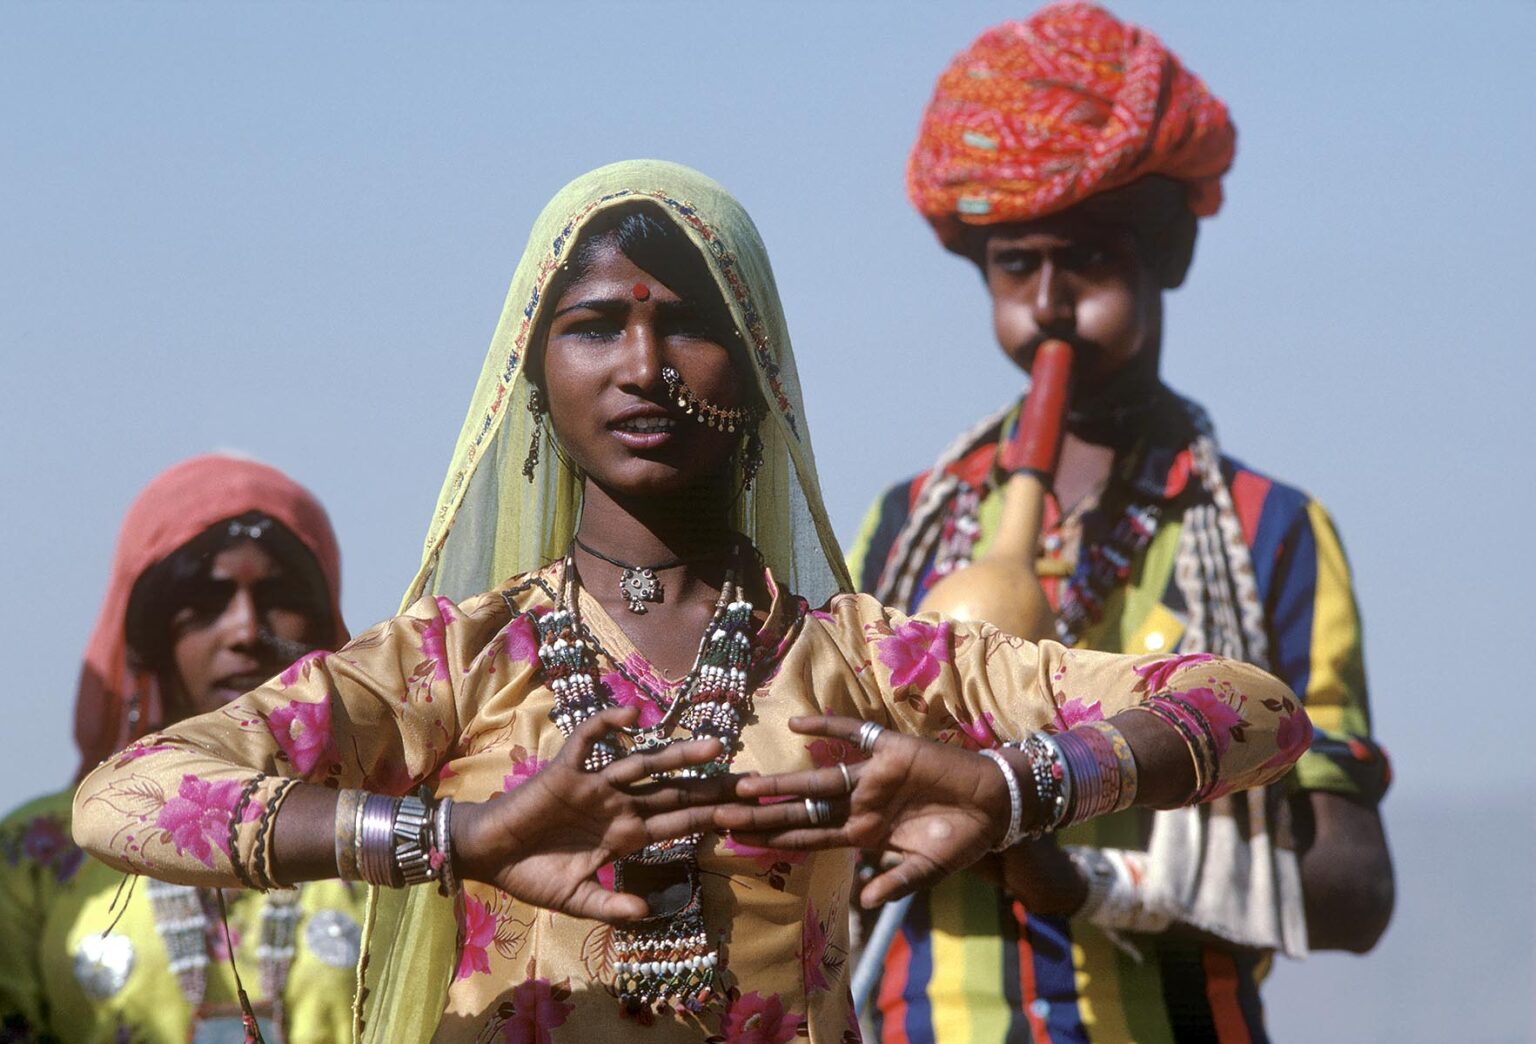 Traditional DANCE of a nomadic BANJARI WOMAN at the PUSHKAR CAMEL FAIR, a 5 day religious festival - RAJASTHAN, INDIA